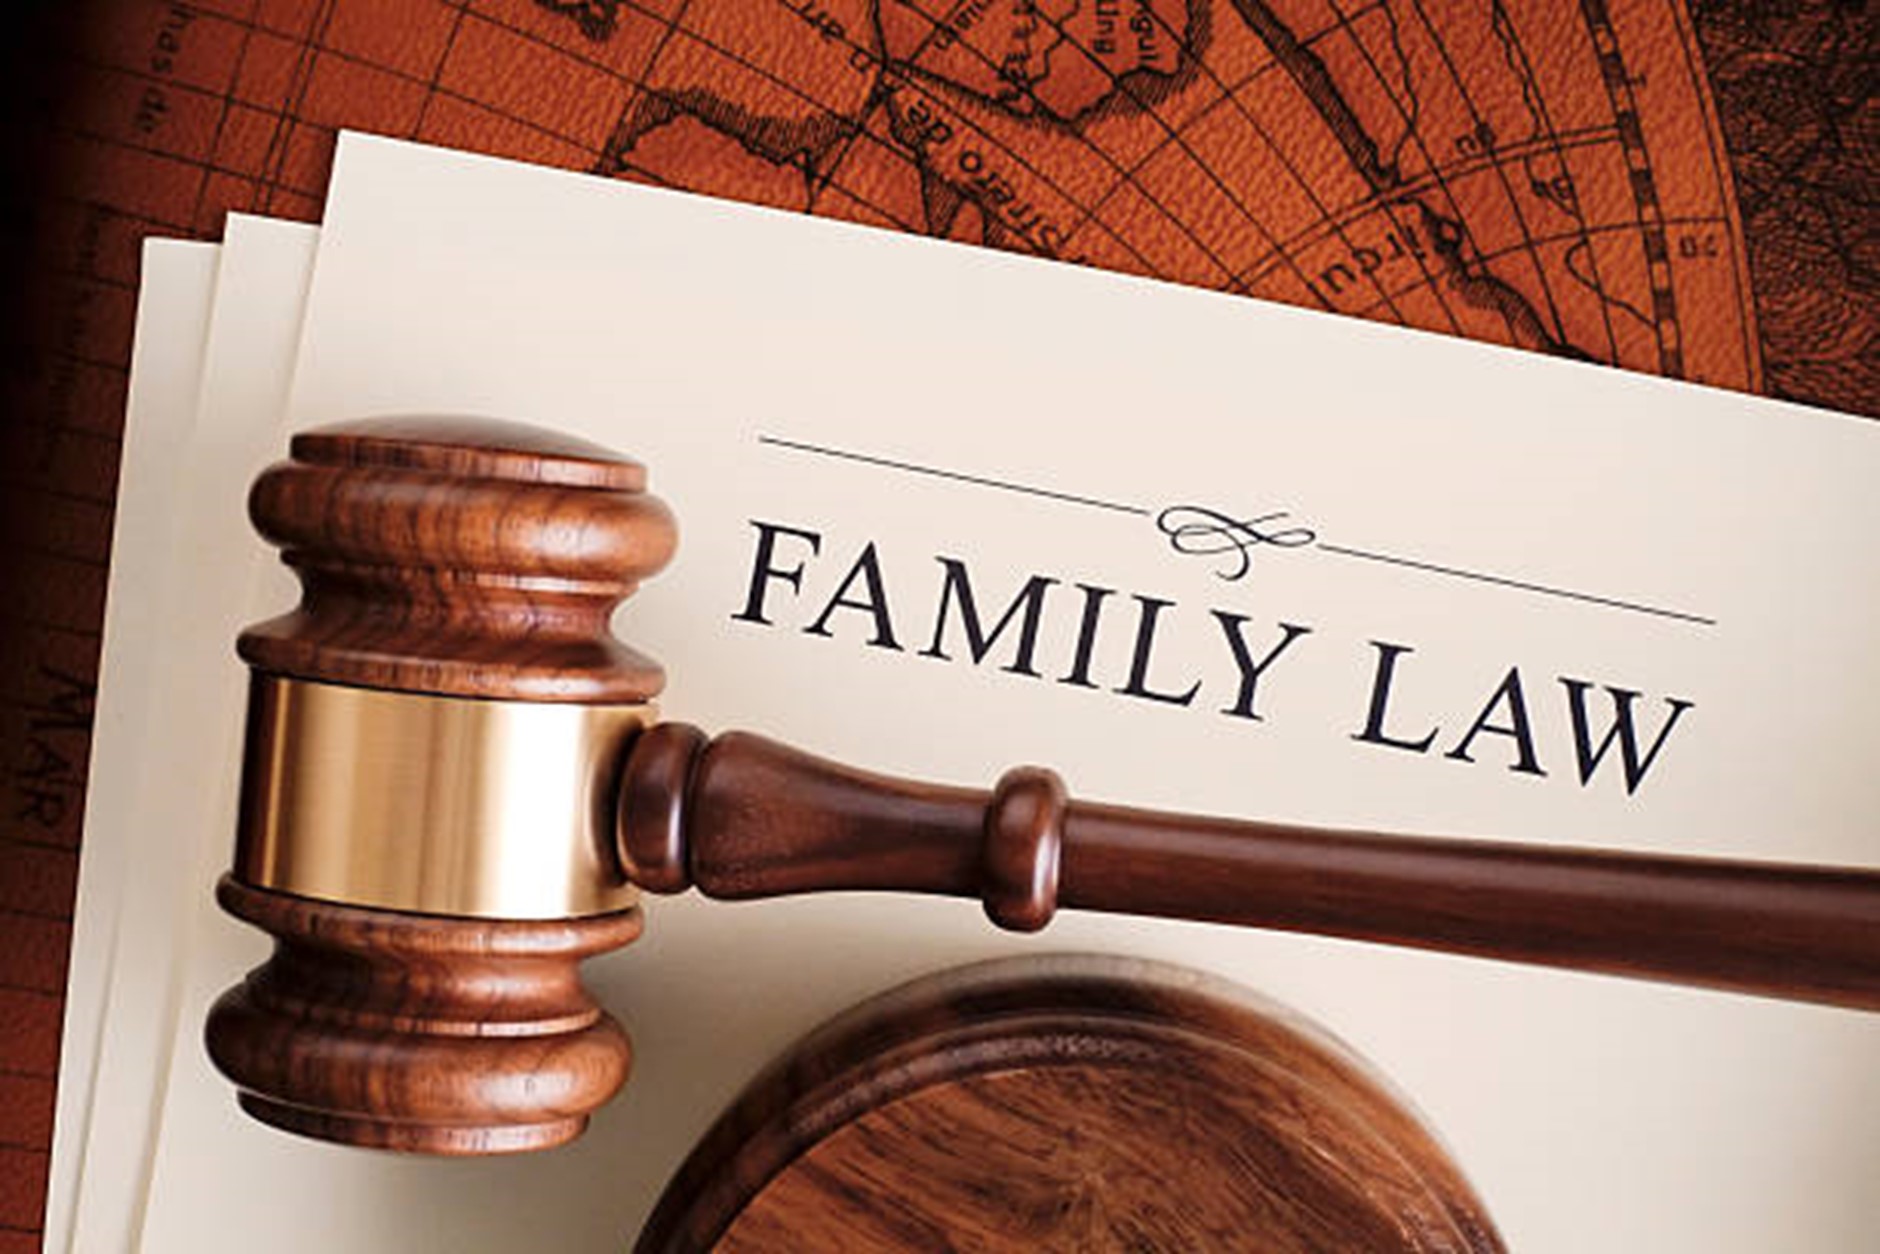 John Szepietowski reviews Family law proceedings